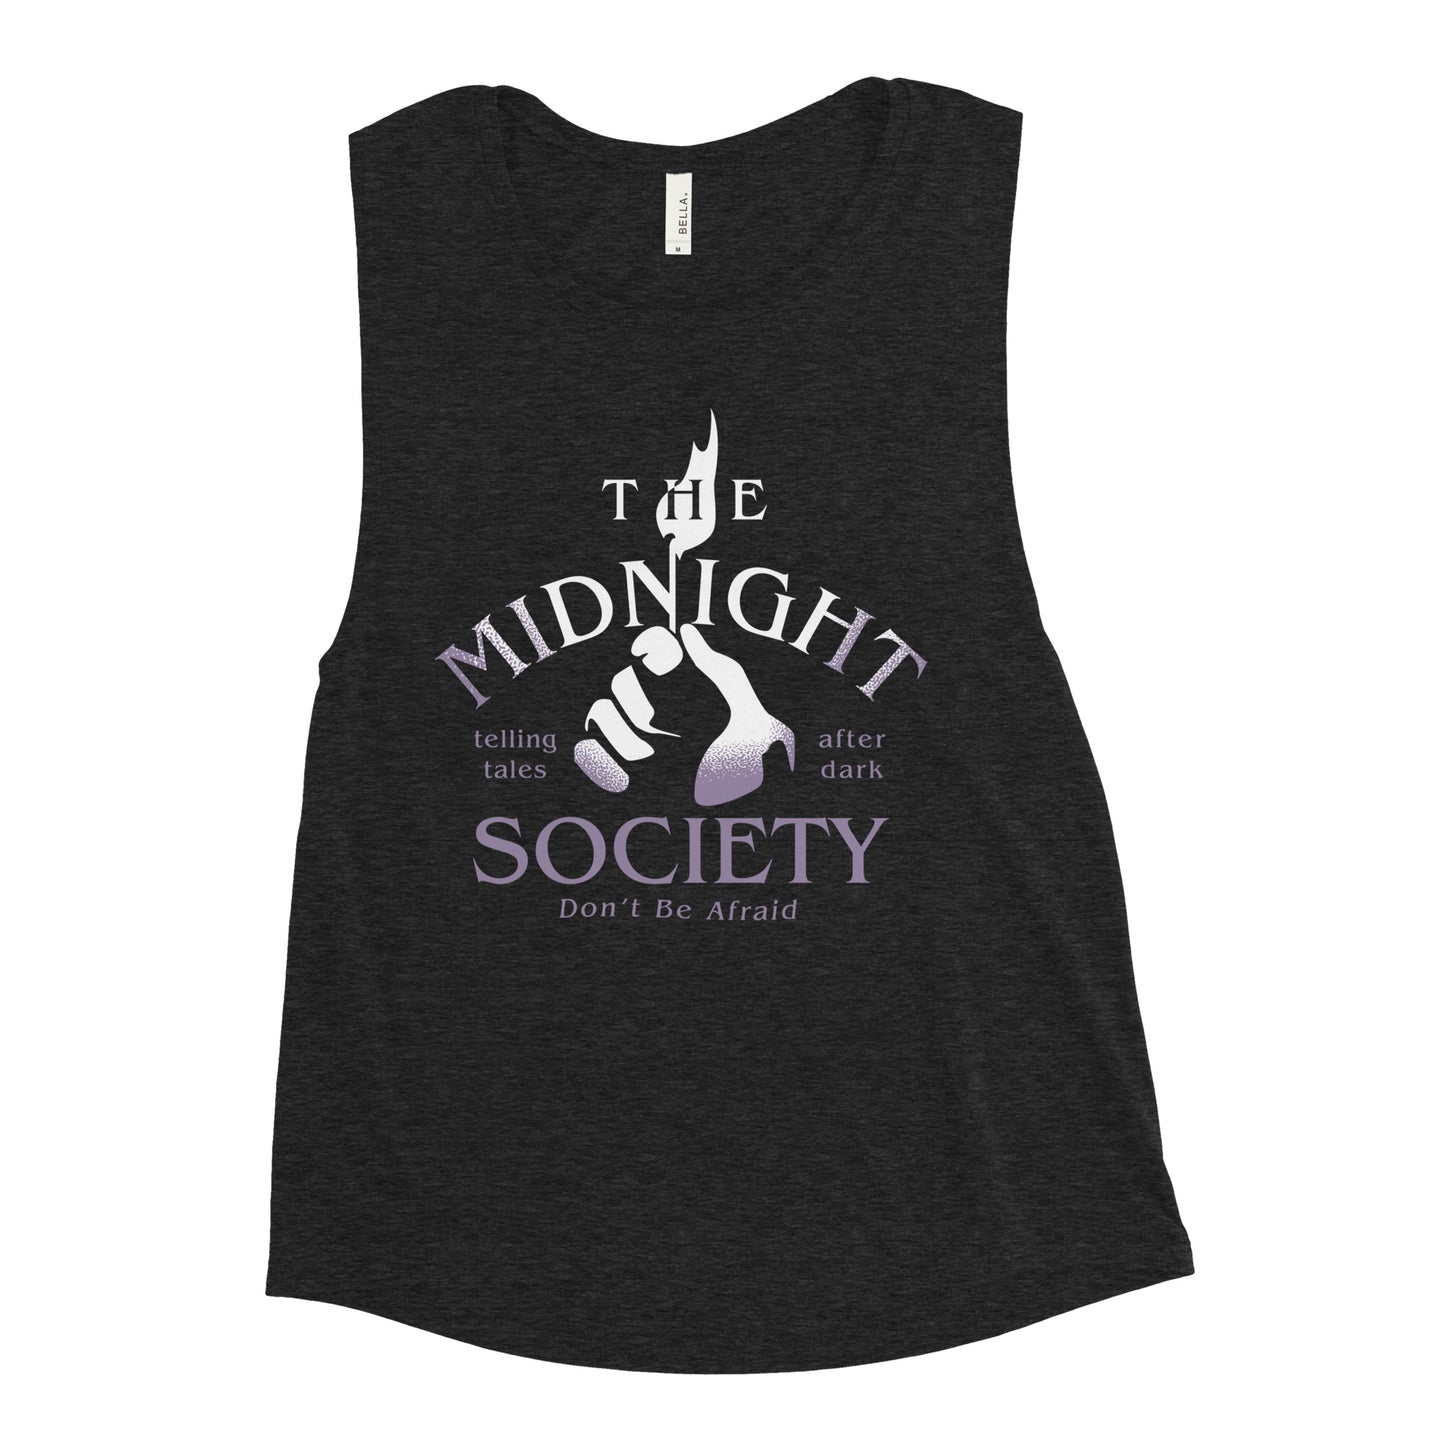 The Midnight Society Women's Muscle Tank